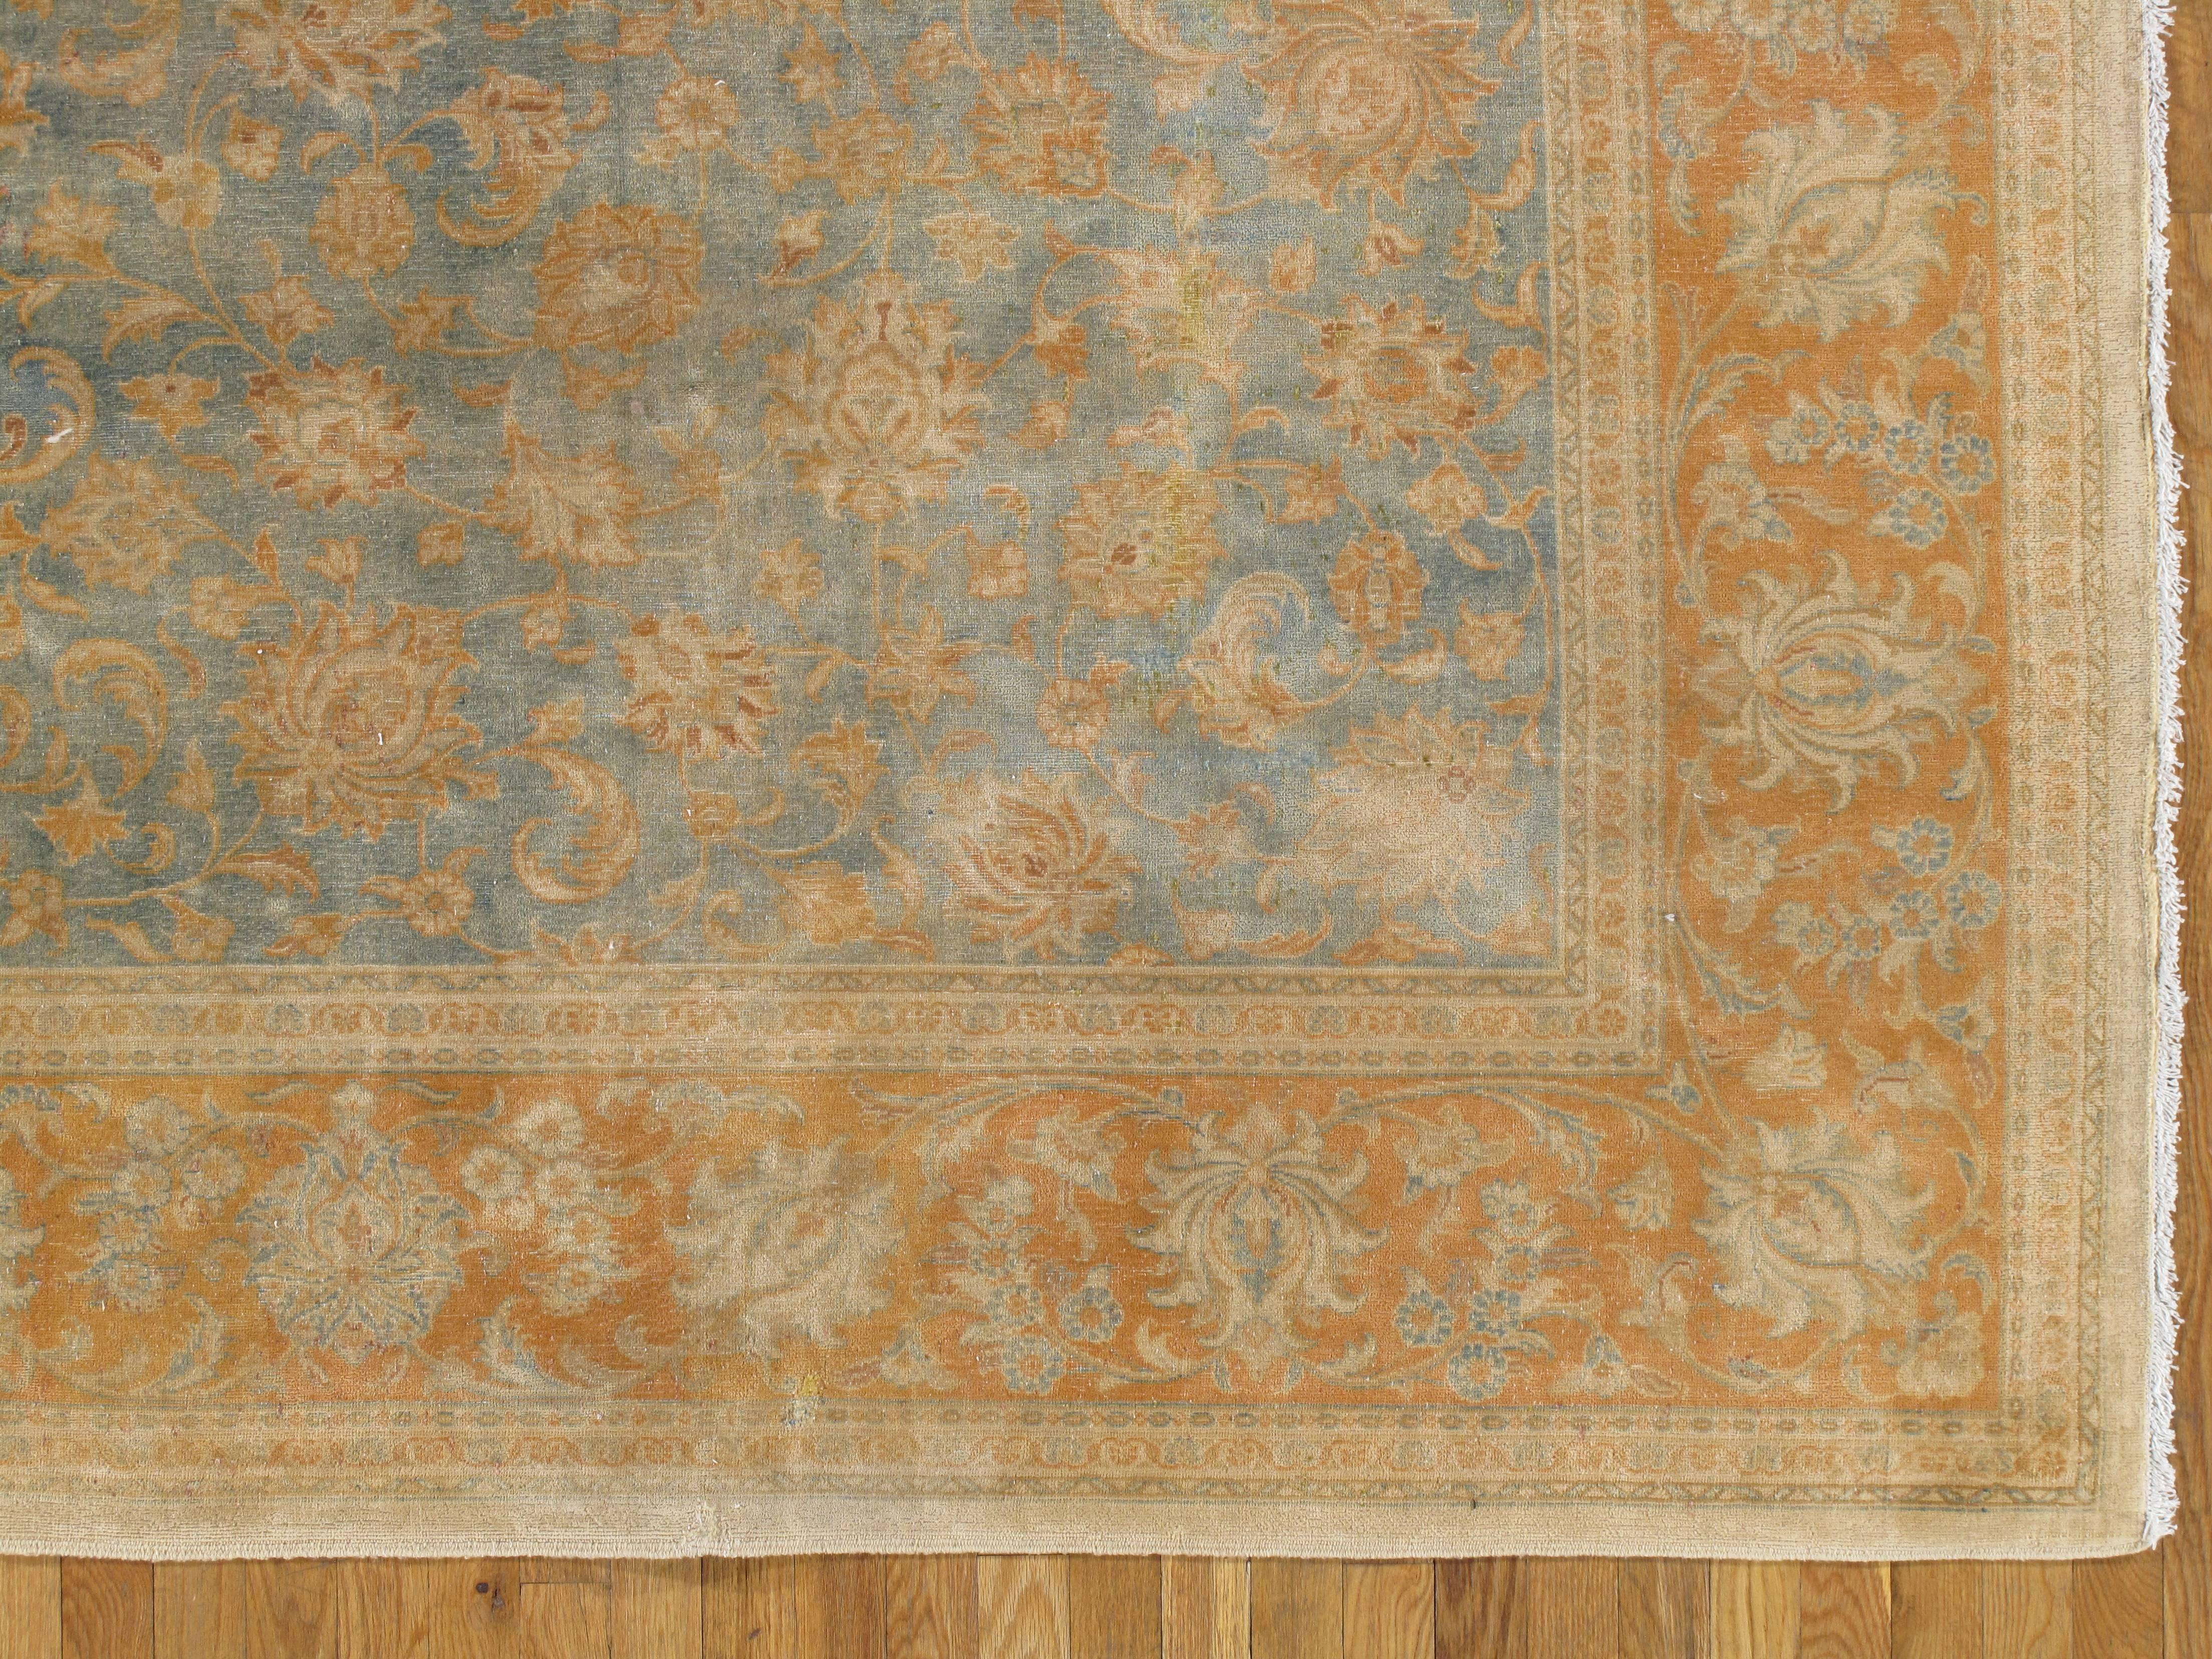 Early 20th Century Antique Kerman Carpet, Allover Persian Handmade Carpet, Light blue, Ivory, Peach